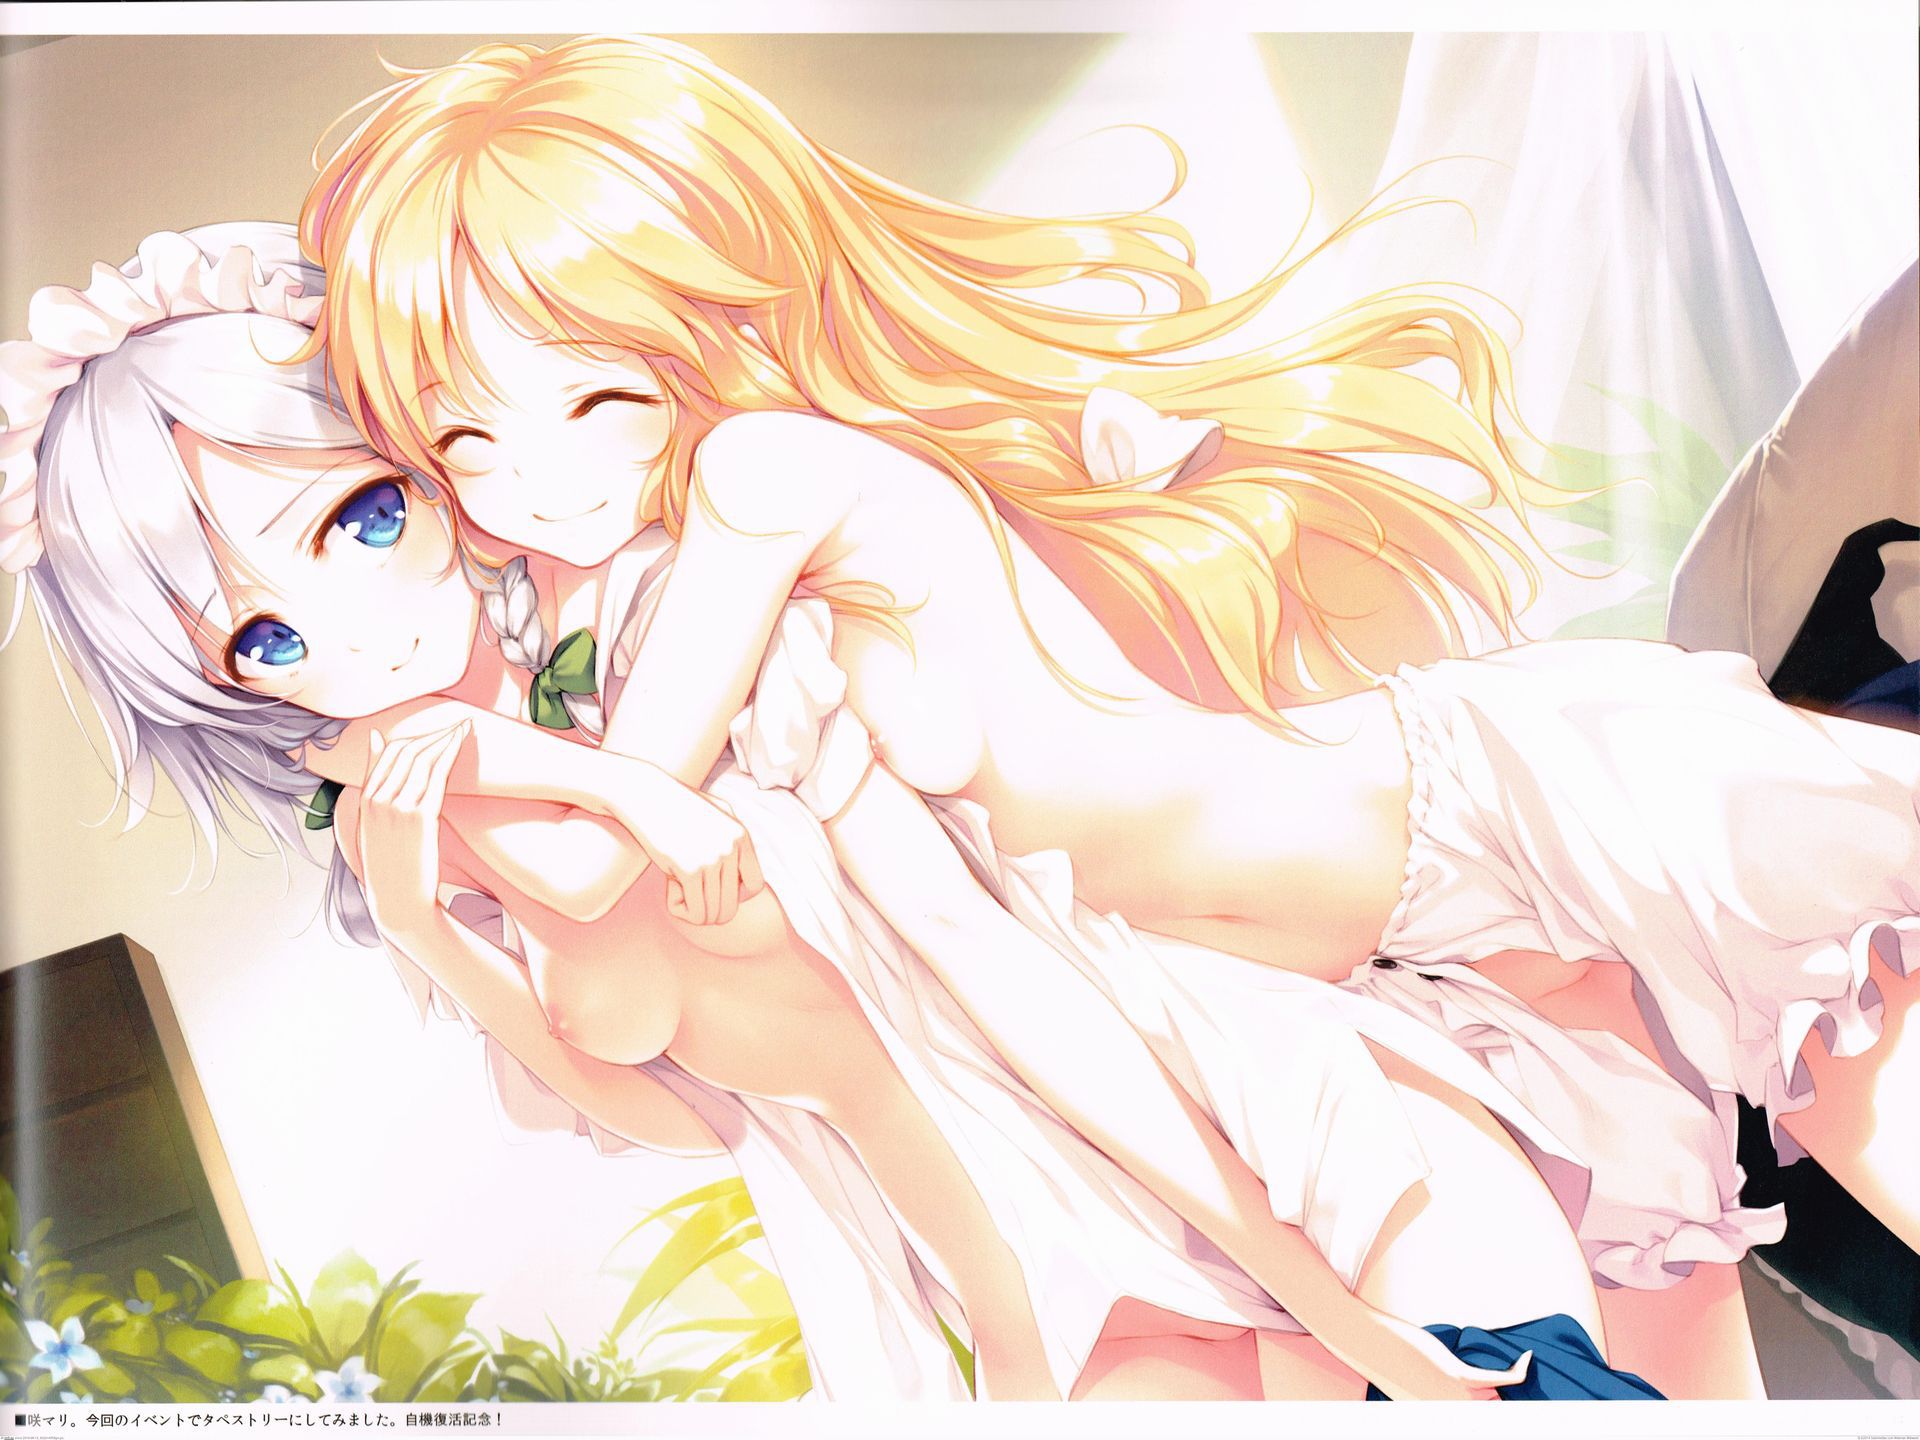 [Secondary-ZIP: anime Yuri lesbian picture Ivonne 36